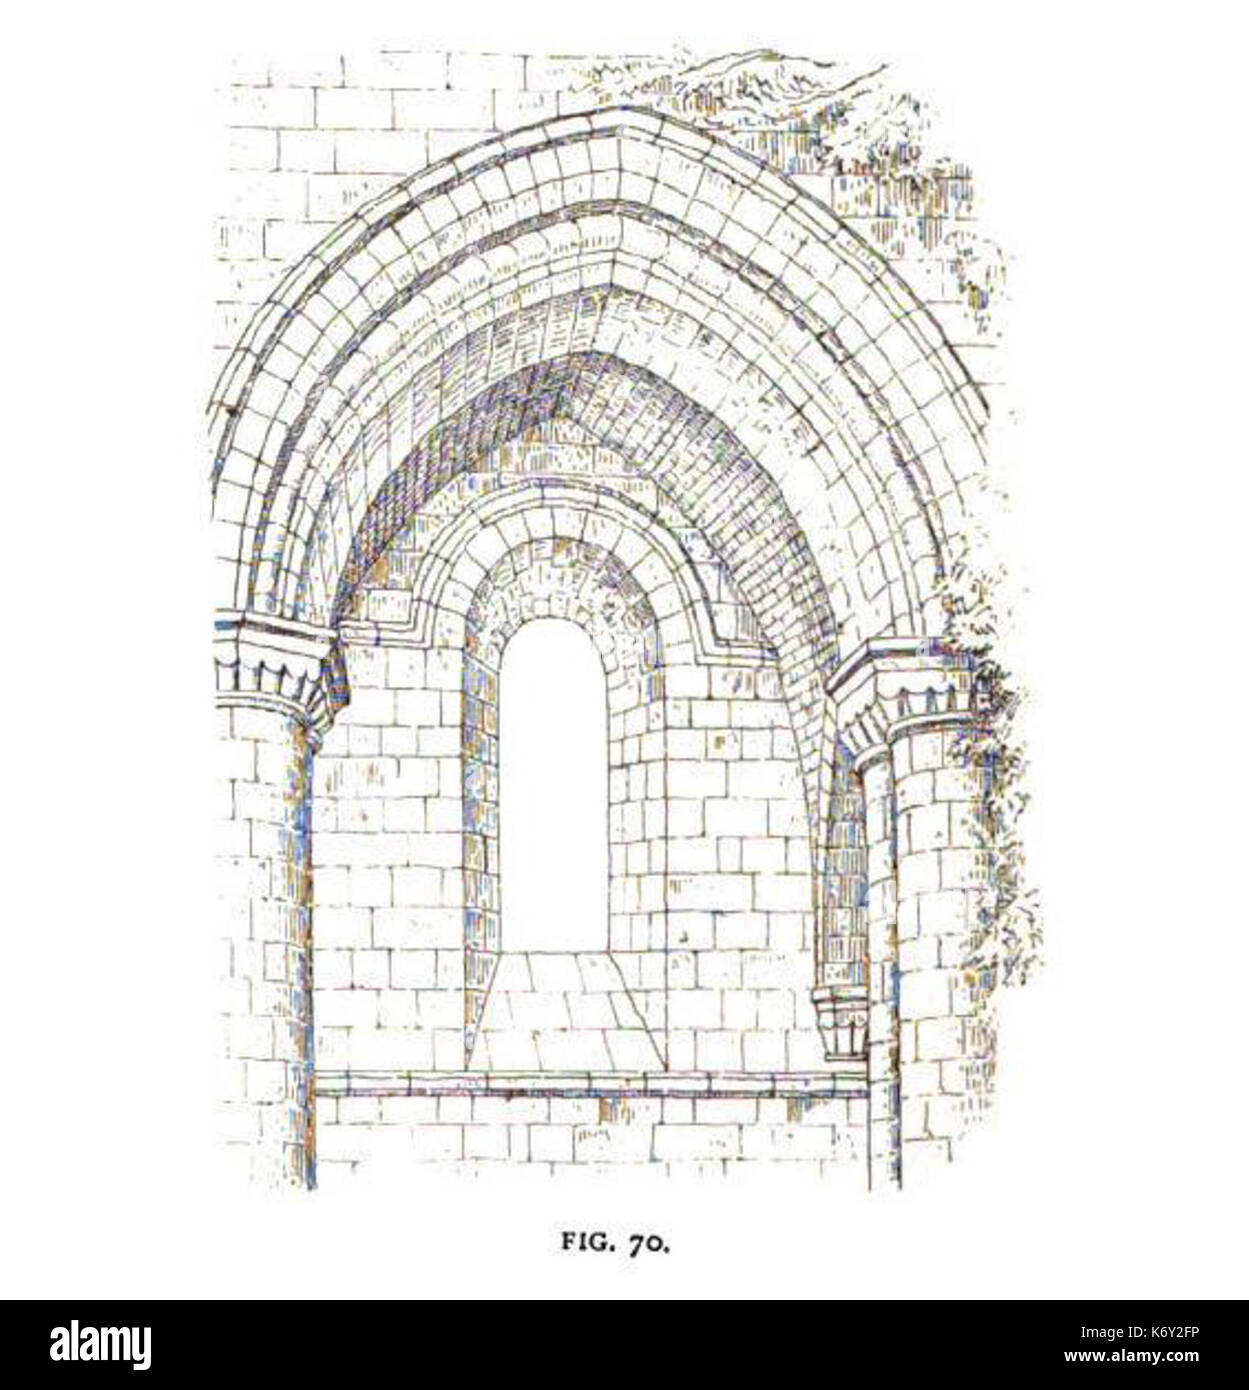 Fig 70 Banque d'allée de l'abbaye de Fountains Banque D'Images